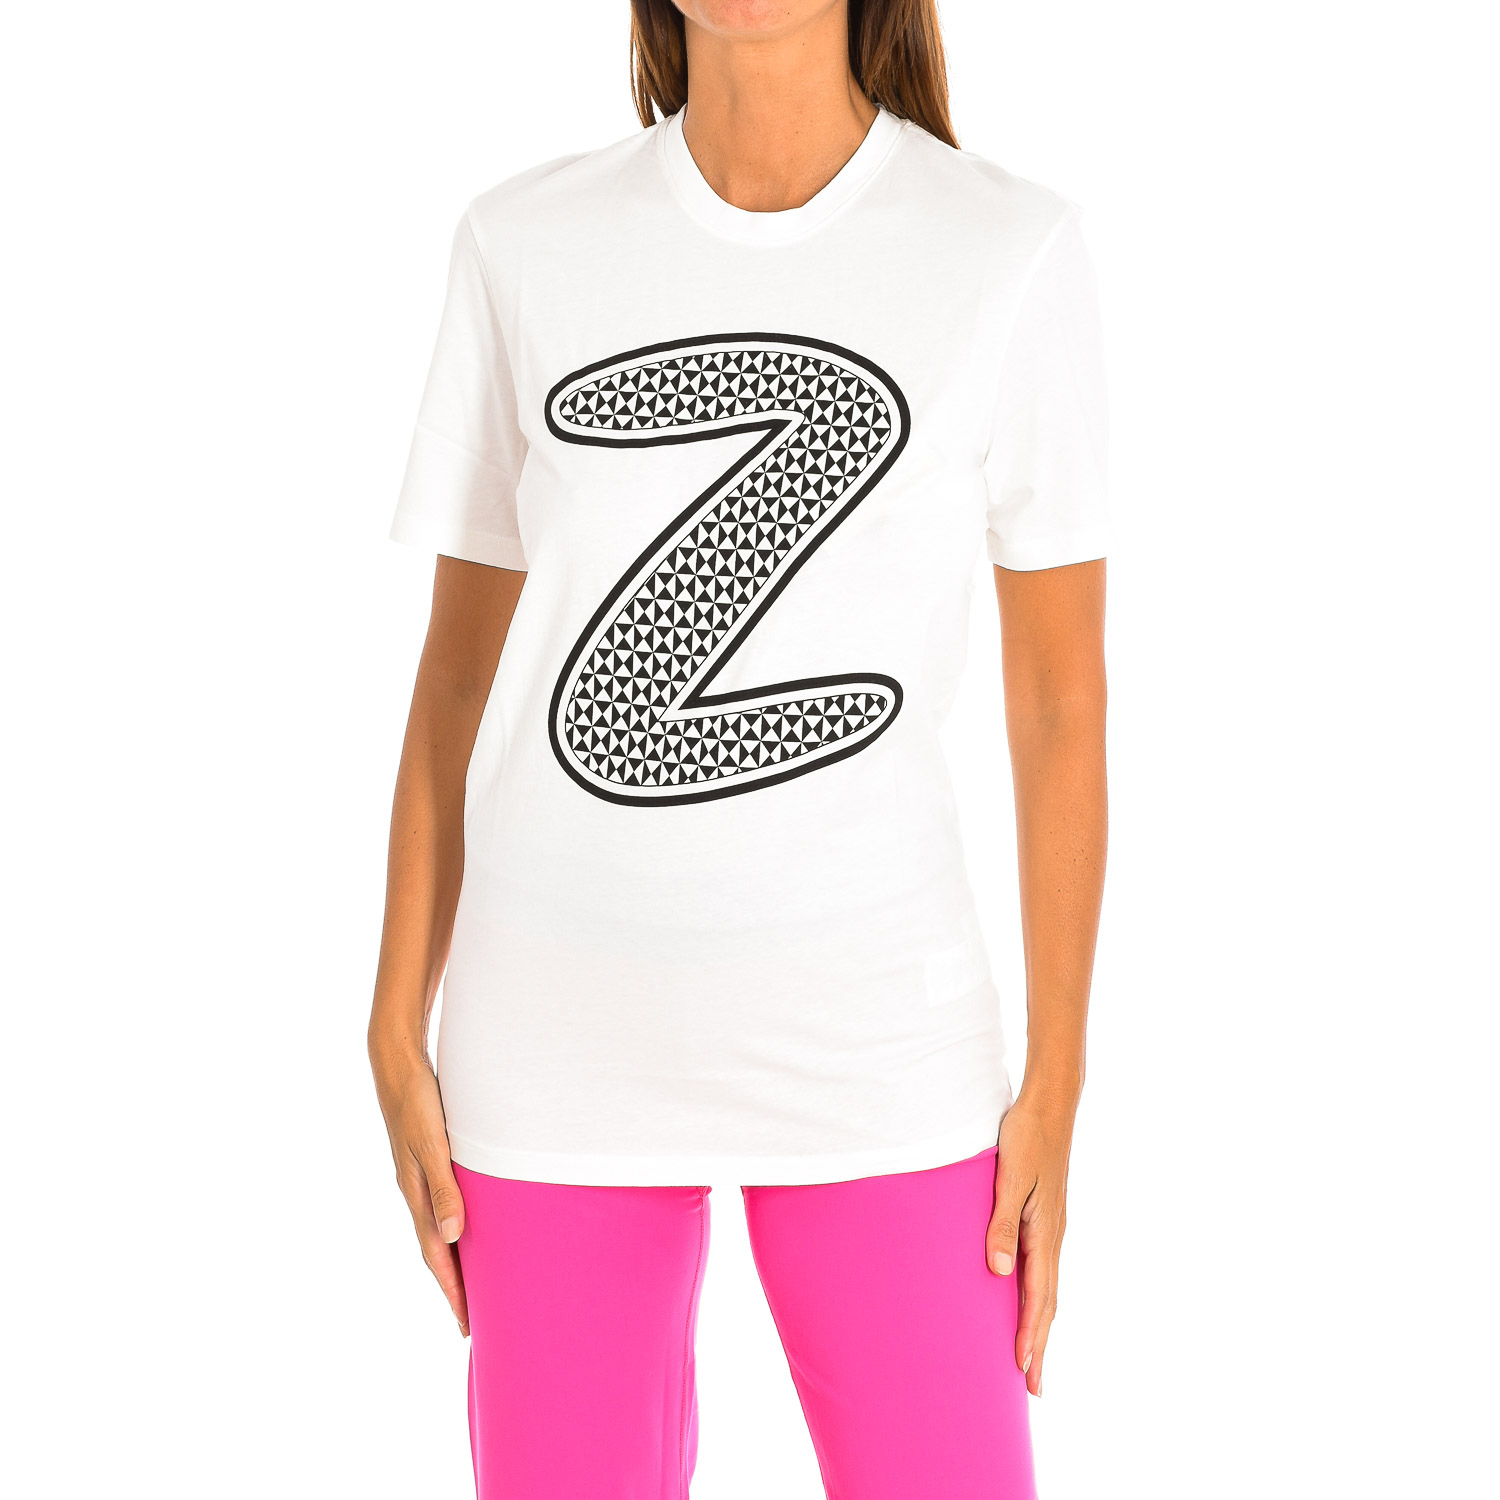 Camiseta Deportiva Zumba Z2t00164